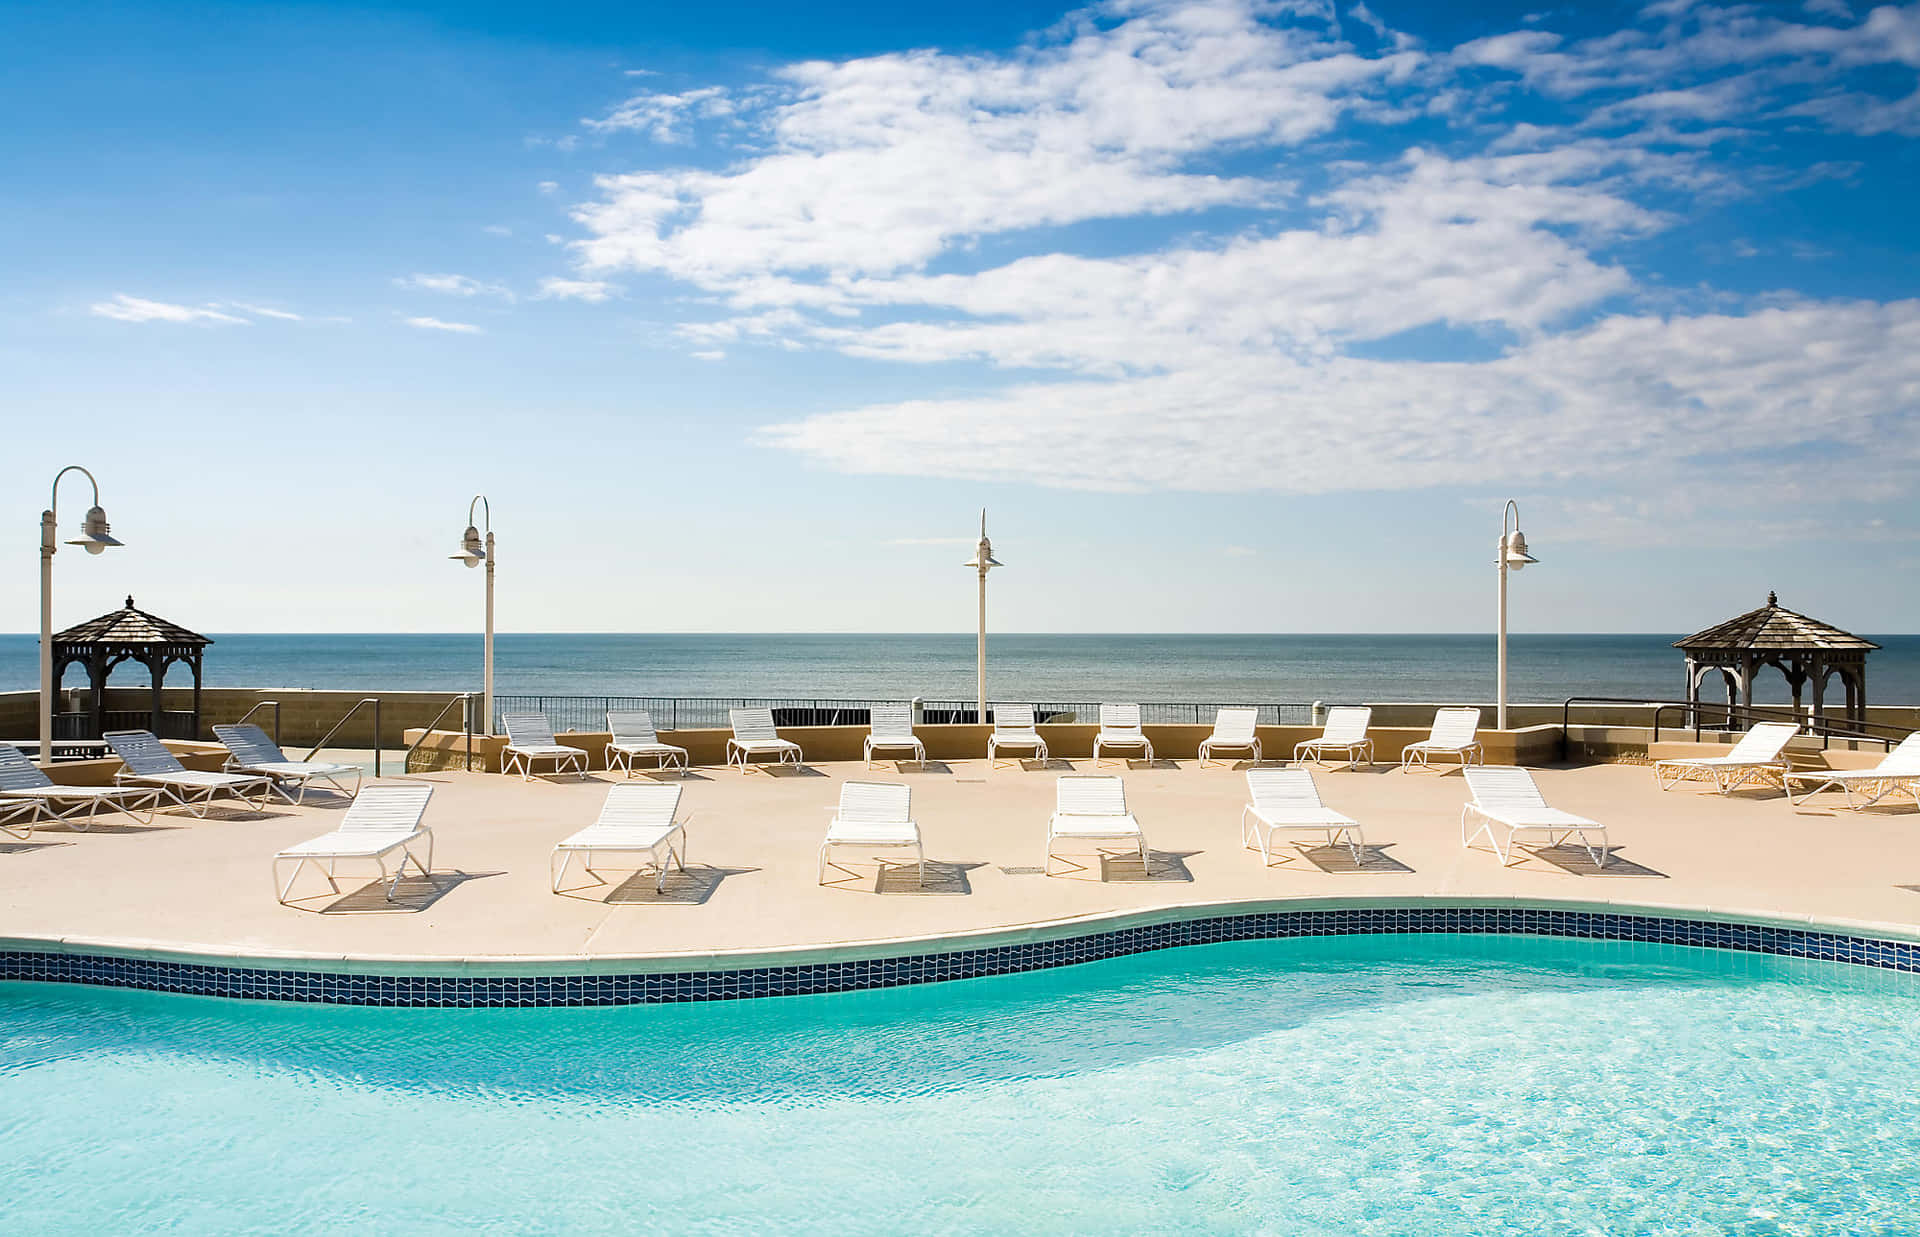 Atlantic City Swimming Pool Picture